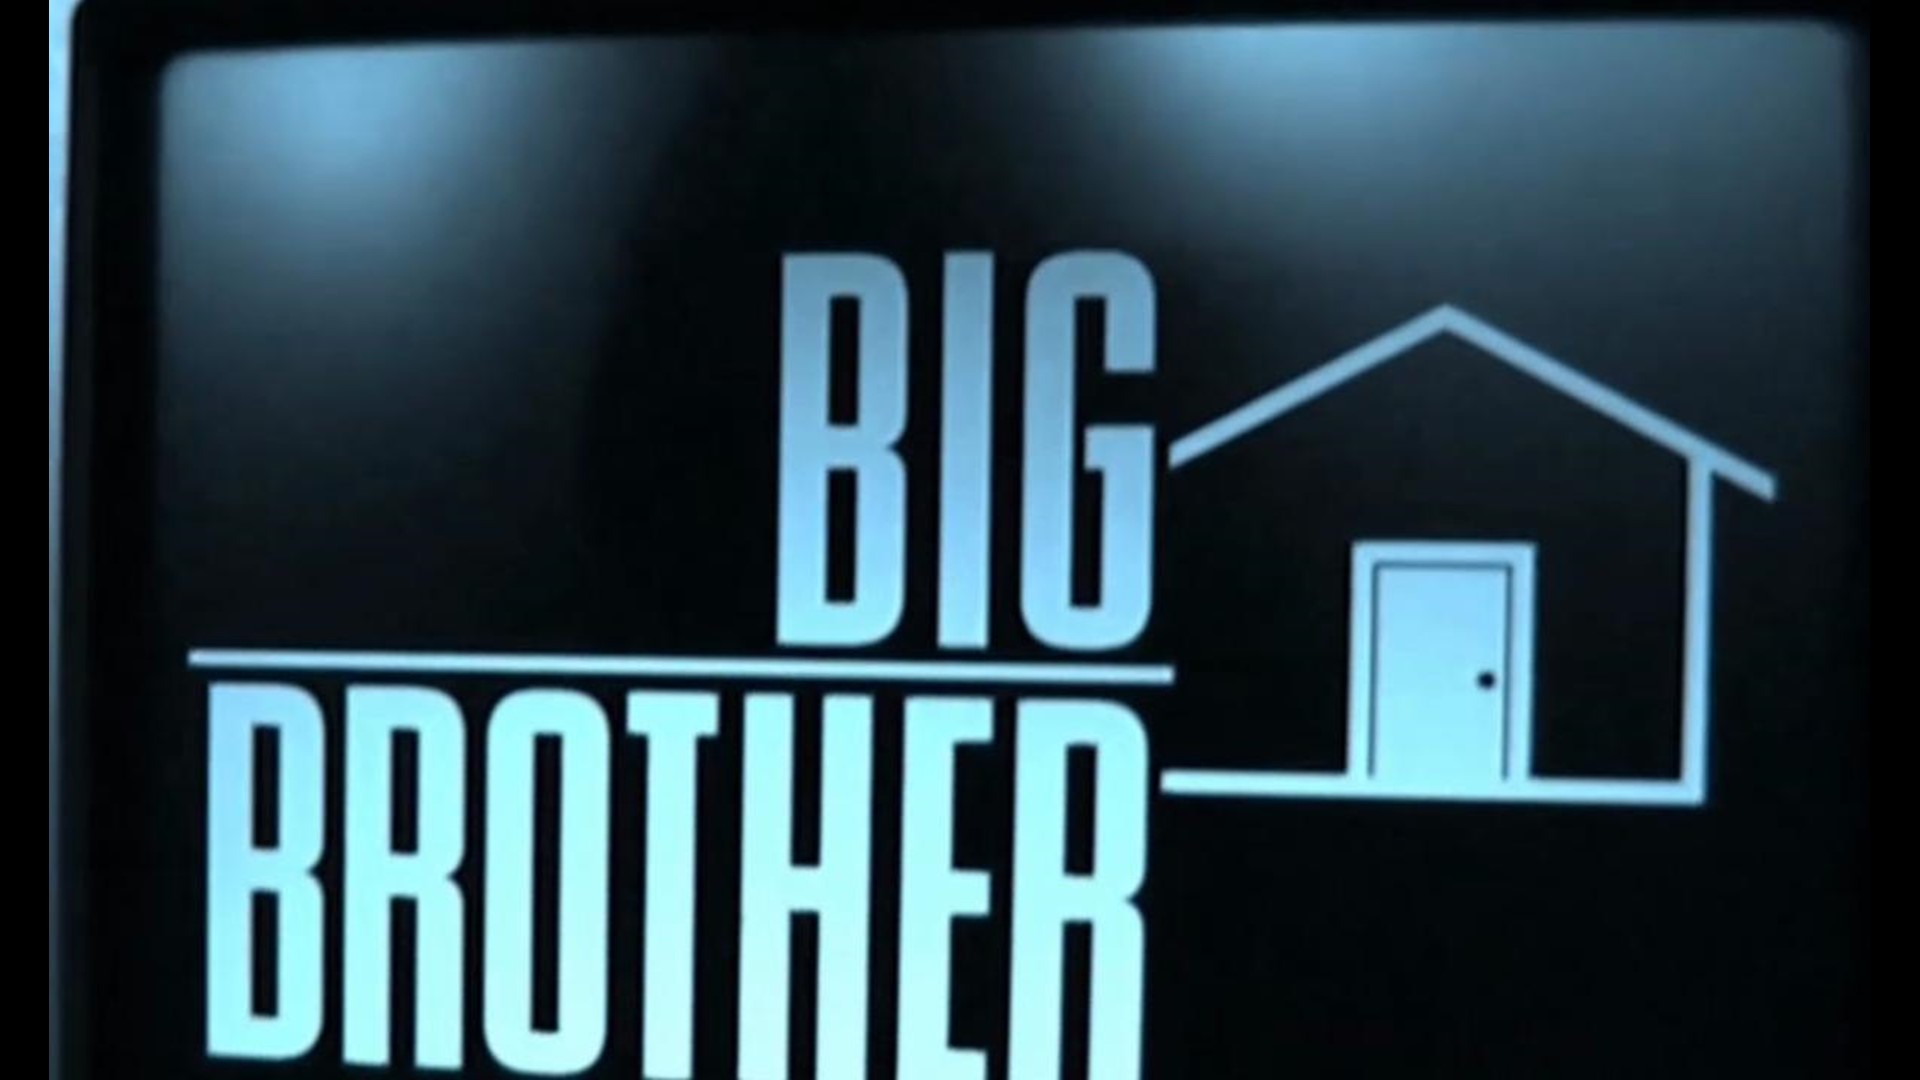 15th Season of ‘Big Brother’ Includes Hilliard Contestant